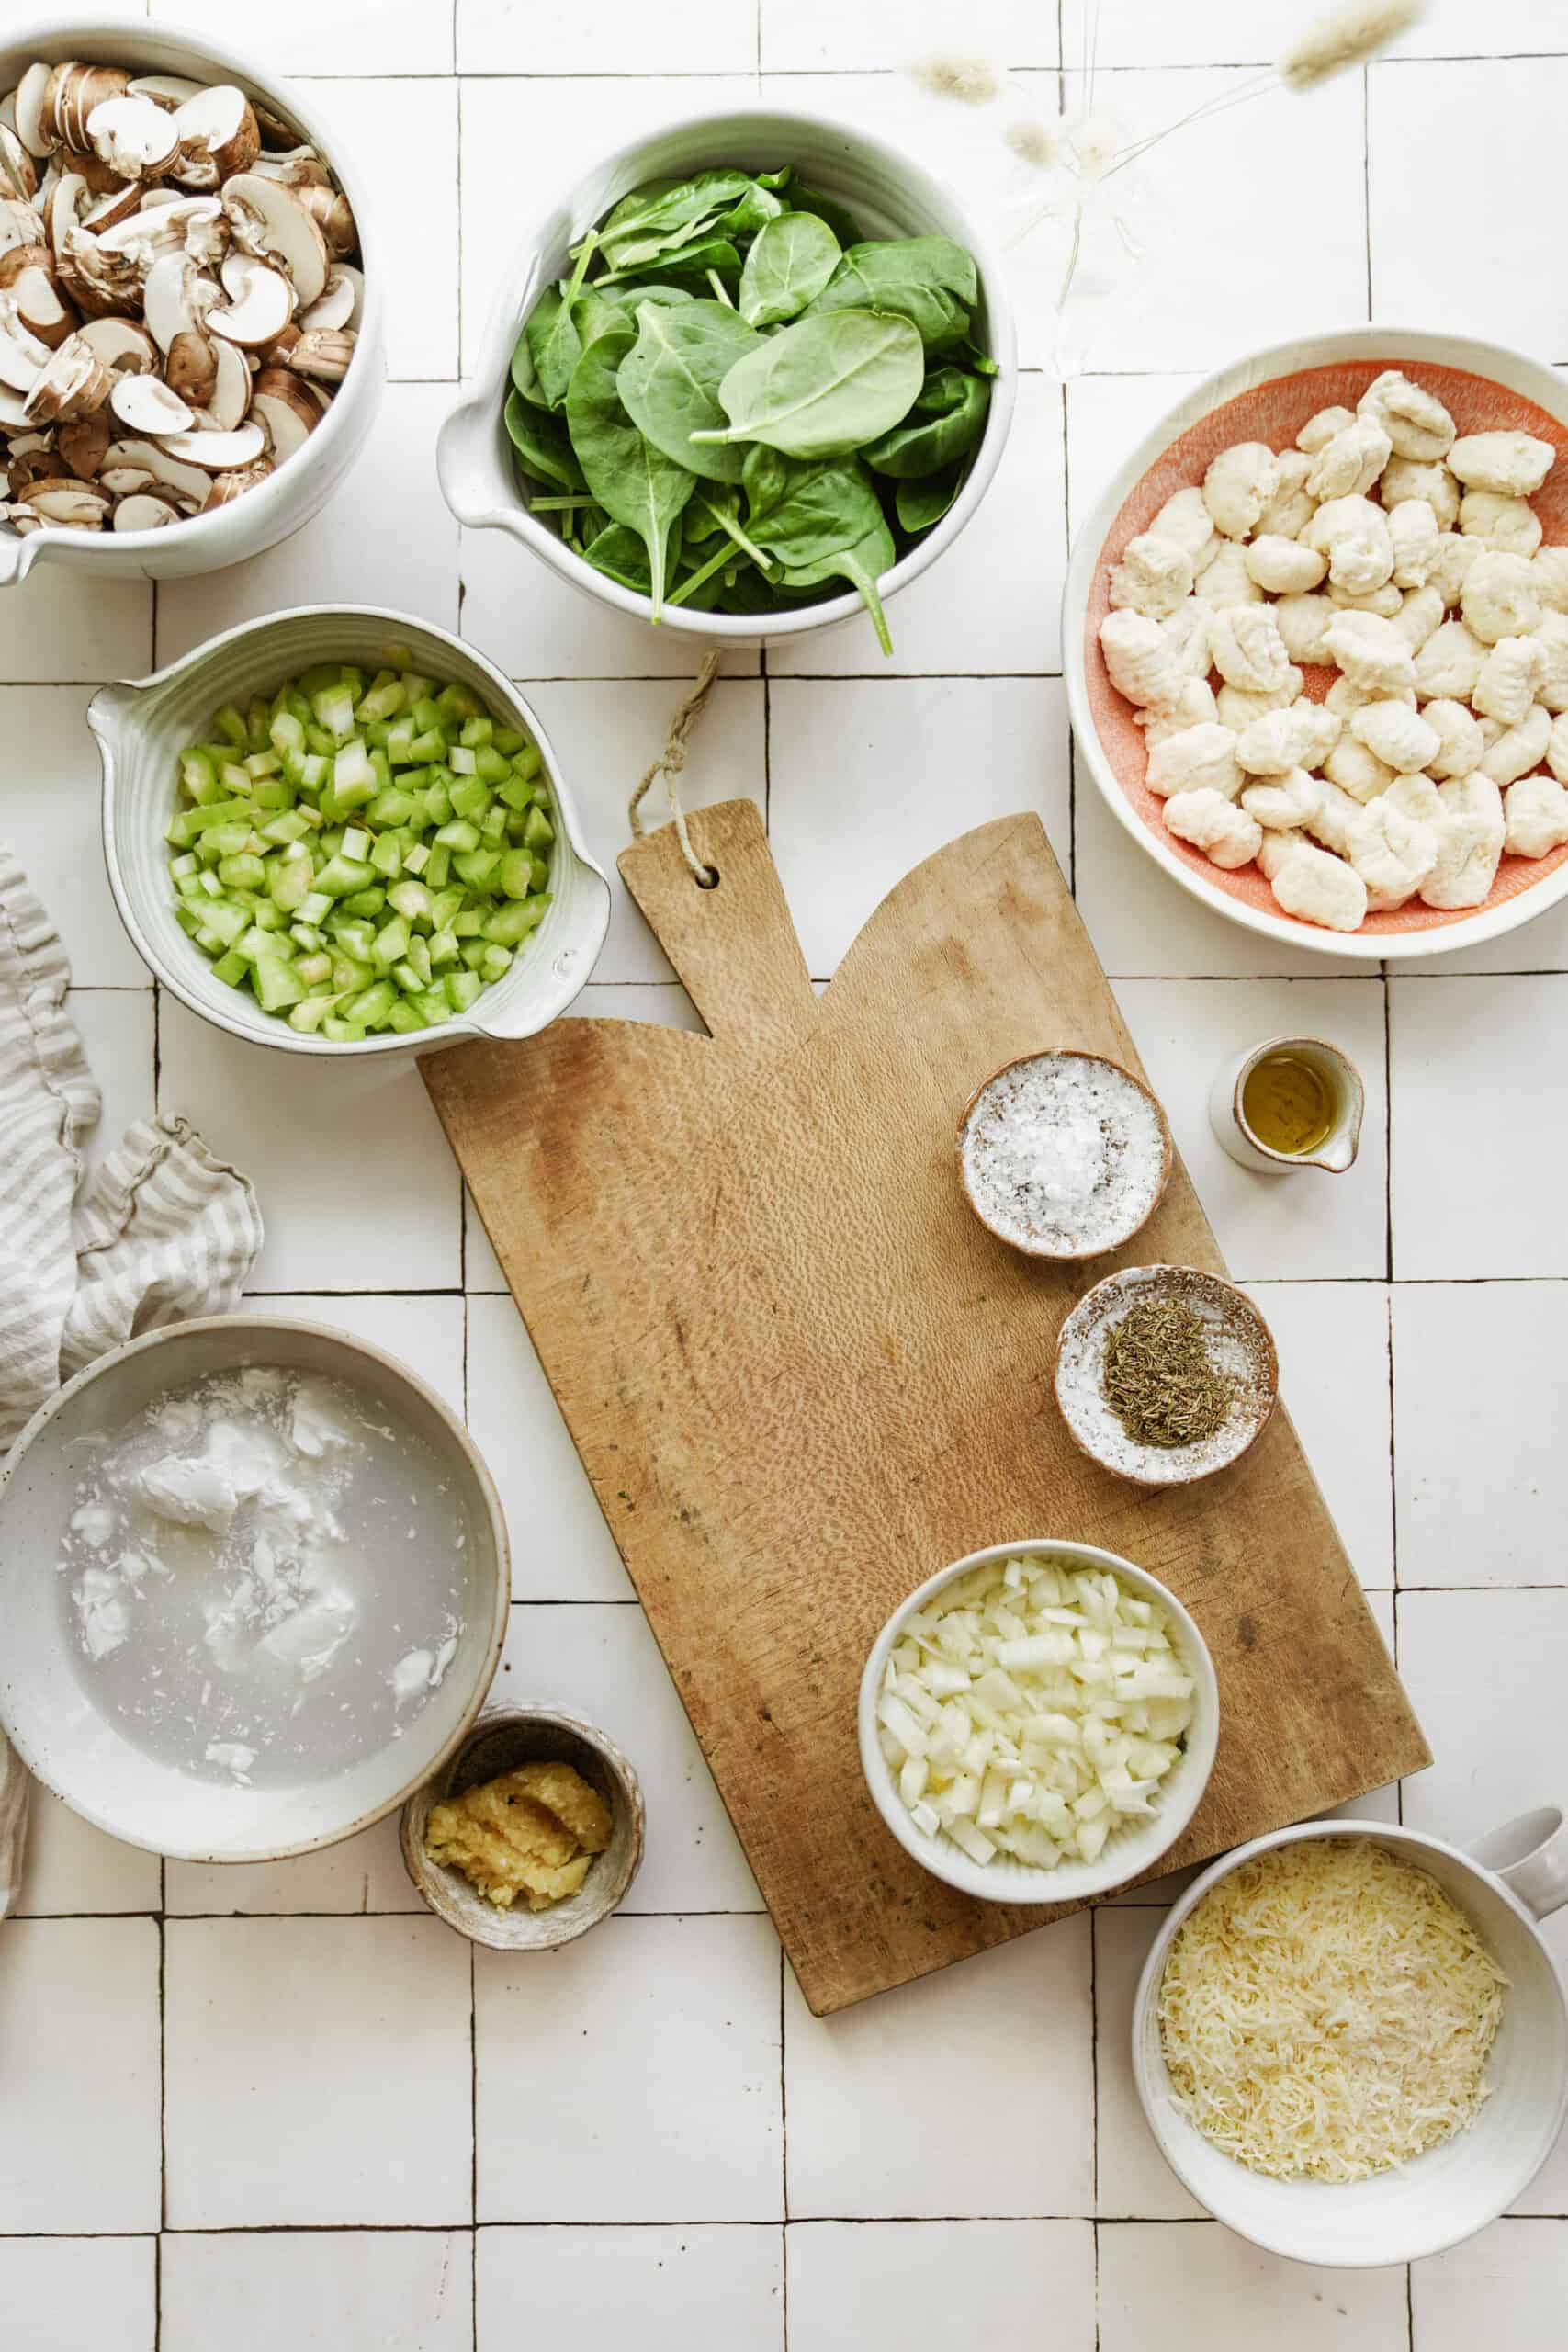 Ingredients for vegan gnocchi soup